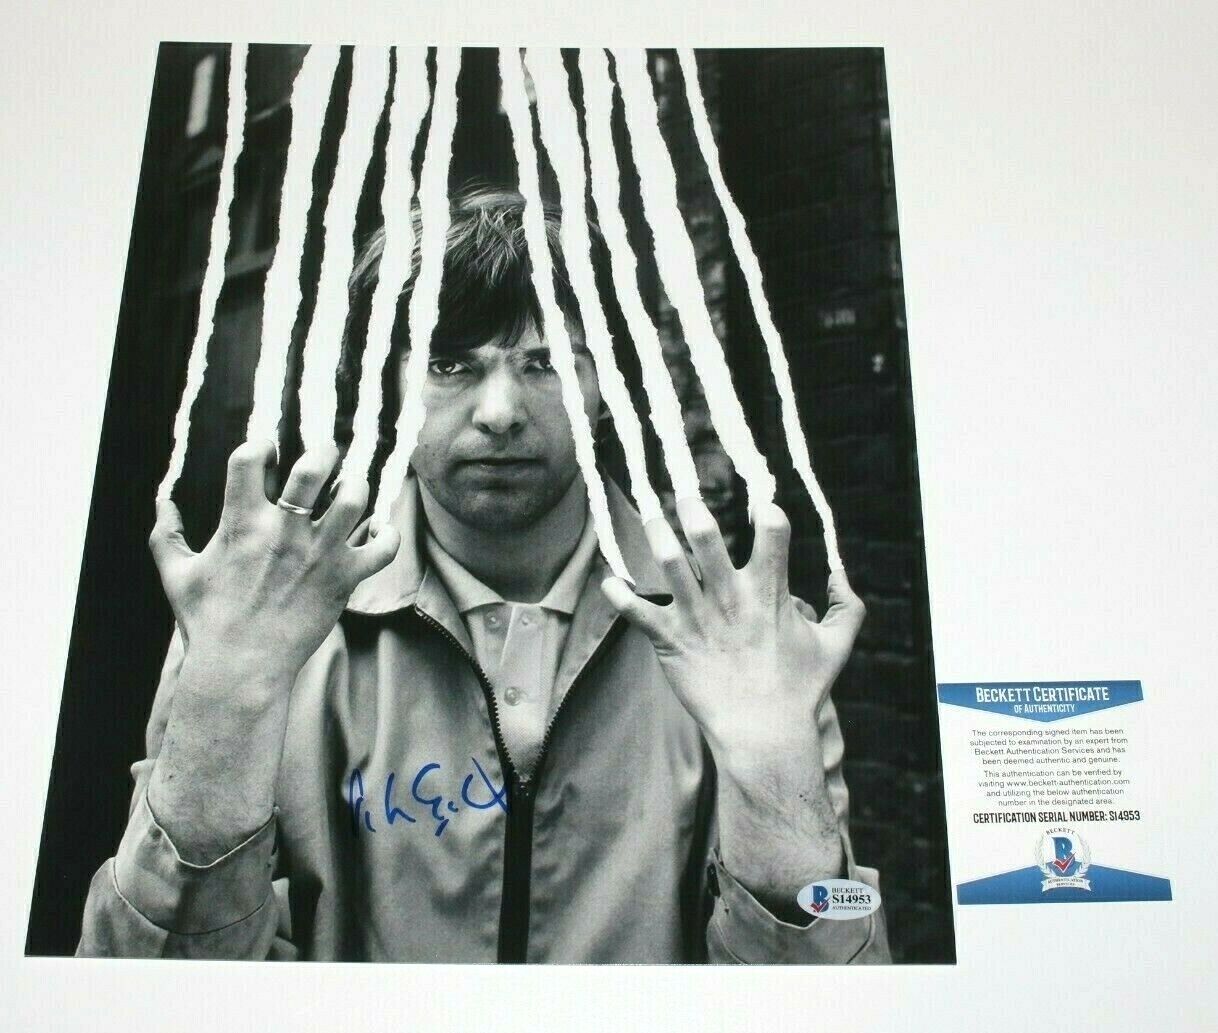 PETER GABRIEL GENESIS SINGER HAND SIGNED 11x14 Photo Poster painting BECKETT COA BAS 1 SO ALBUM